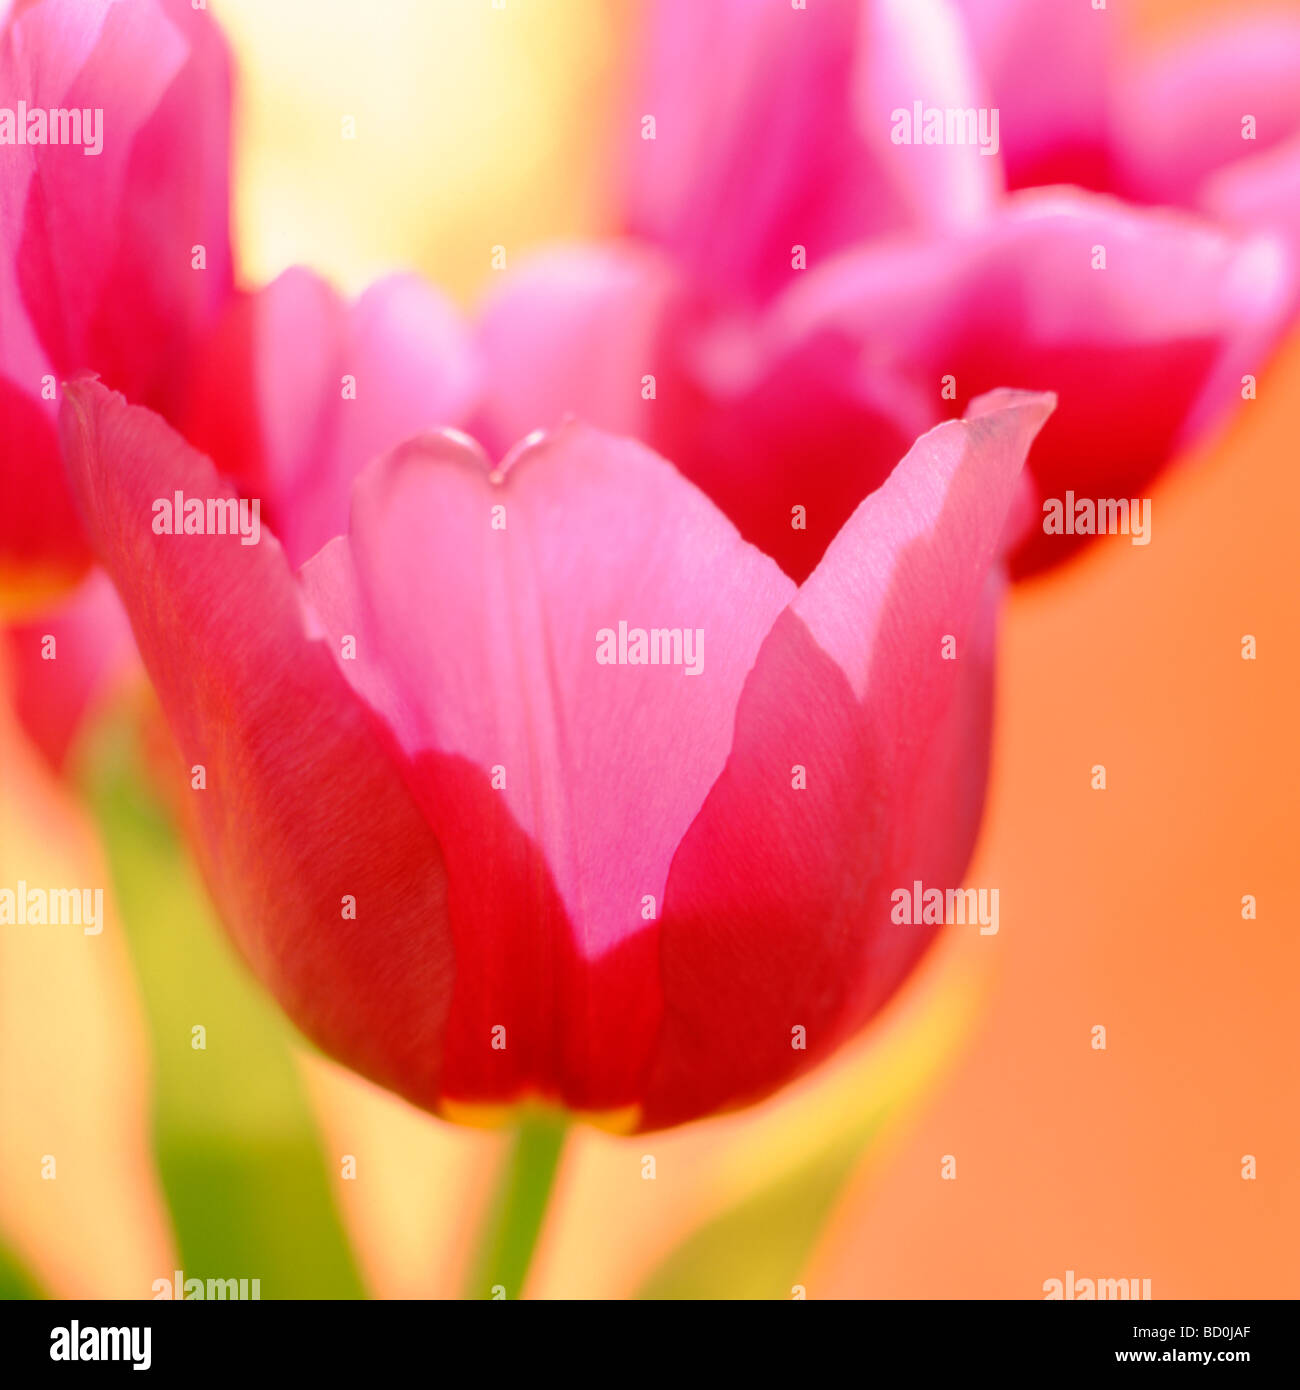 zeitgenössische Tulpen Kunstfotografie Jane Ann Butler Fotografie JABP274 Stockfoto